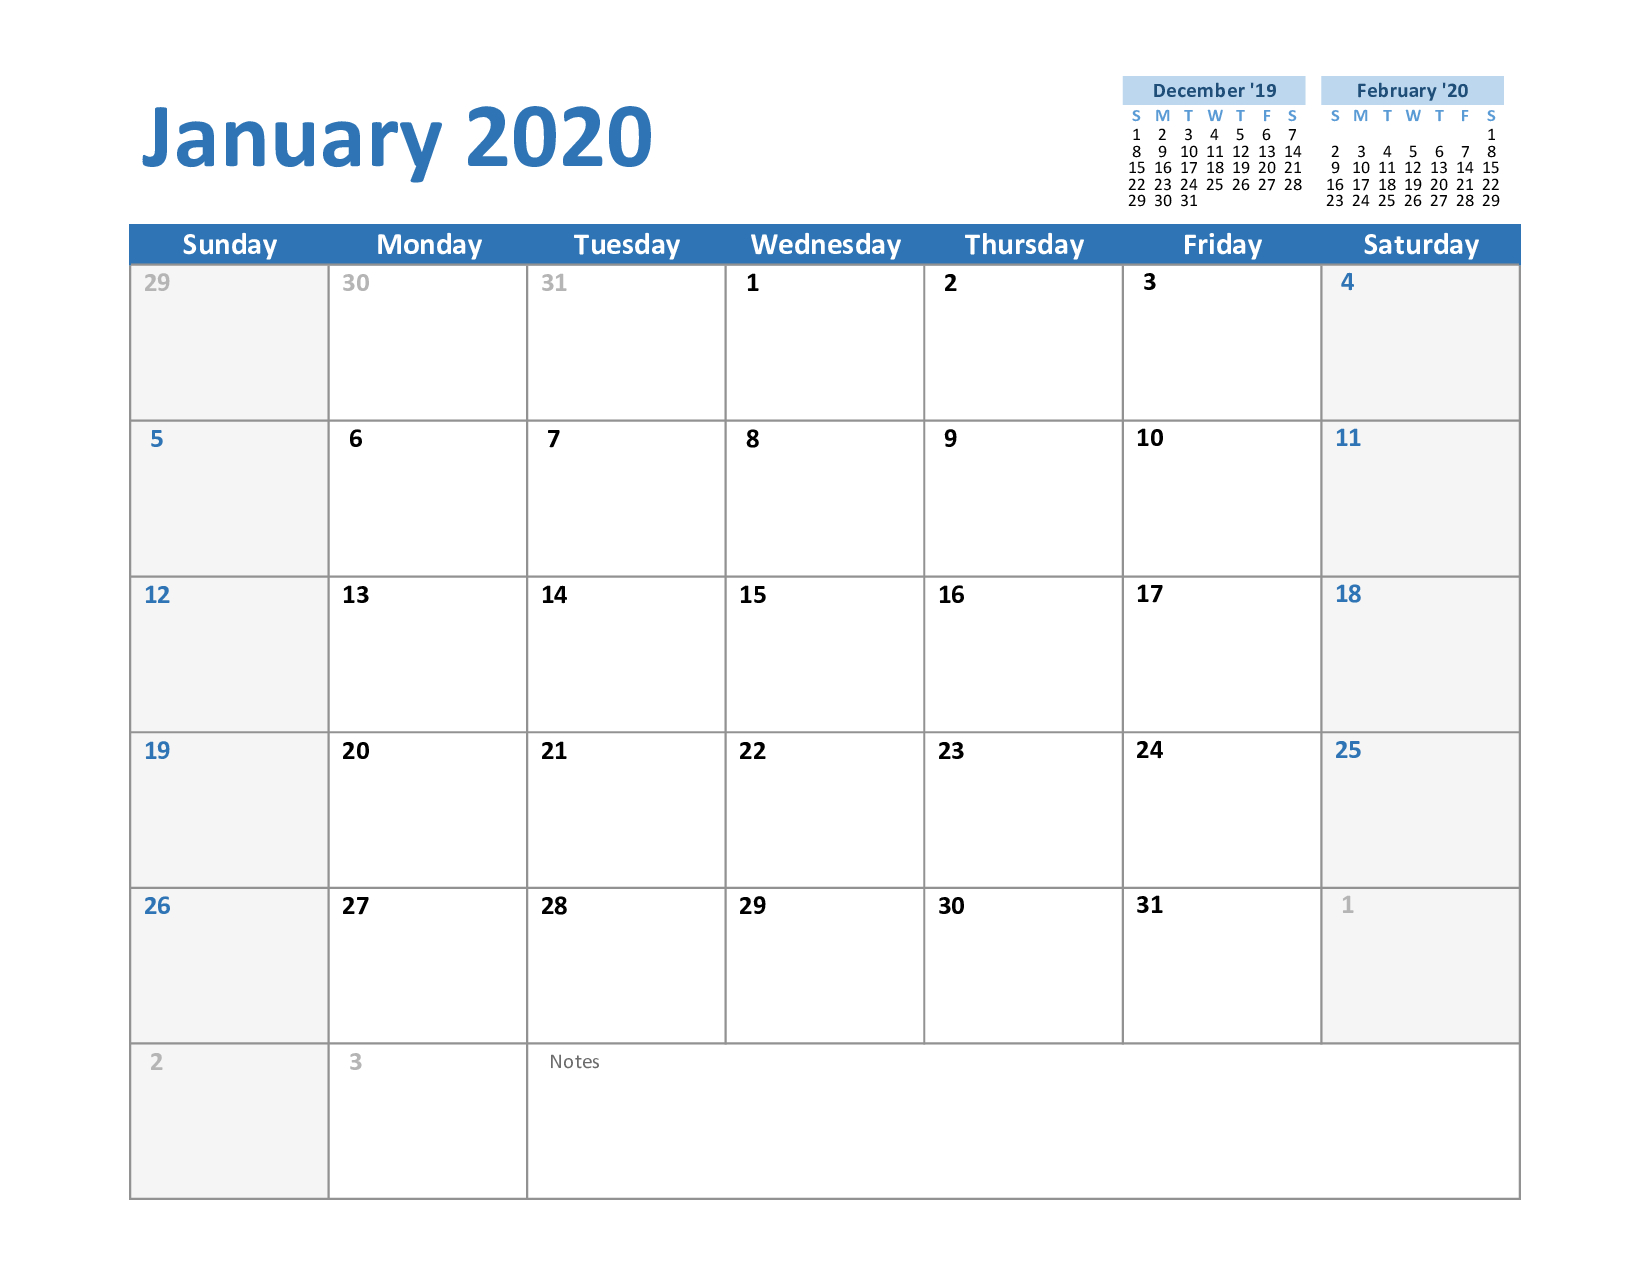 Blank January 2020 Calendar Printable - Togo.wpart.co